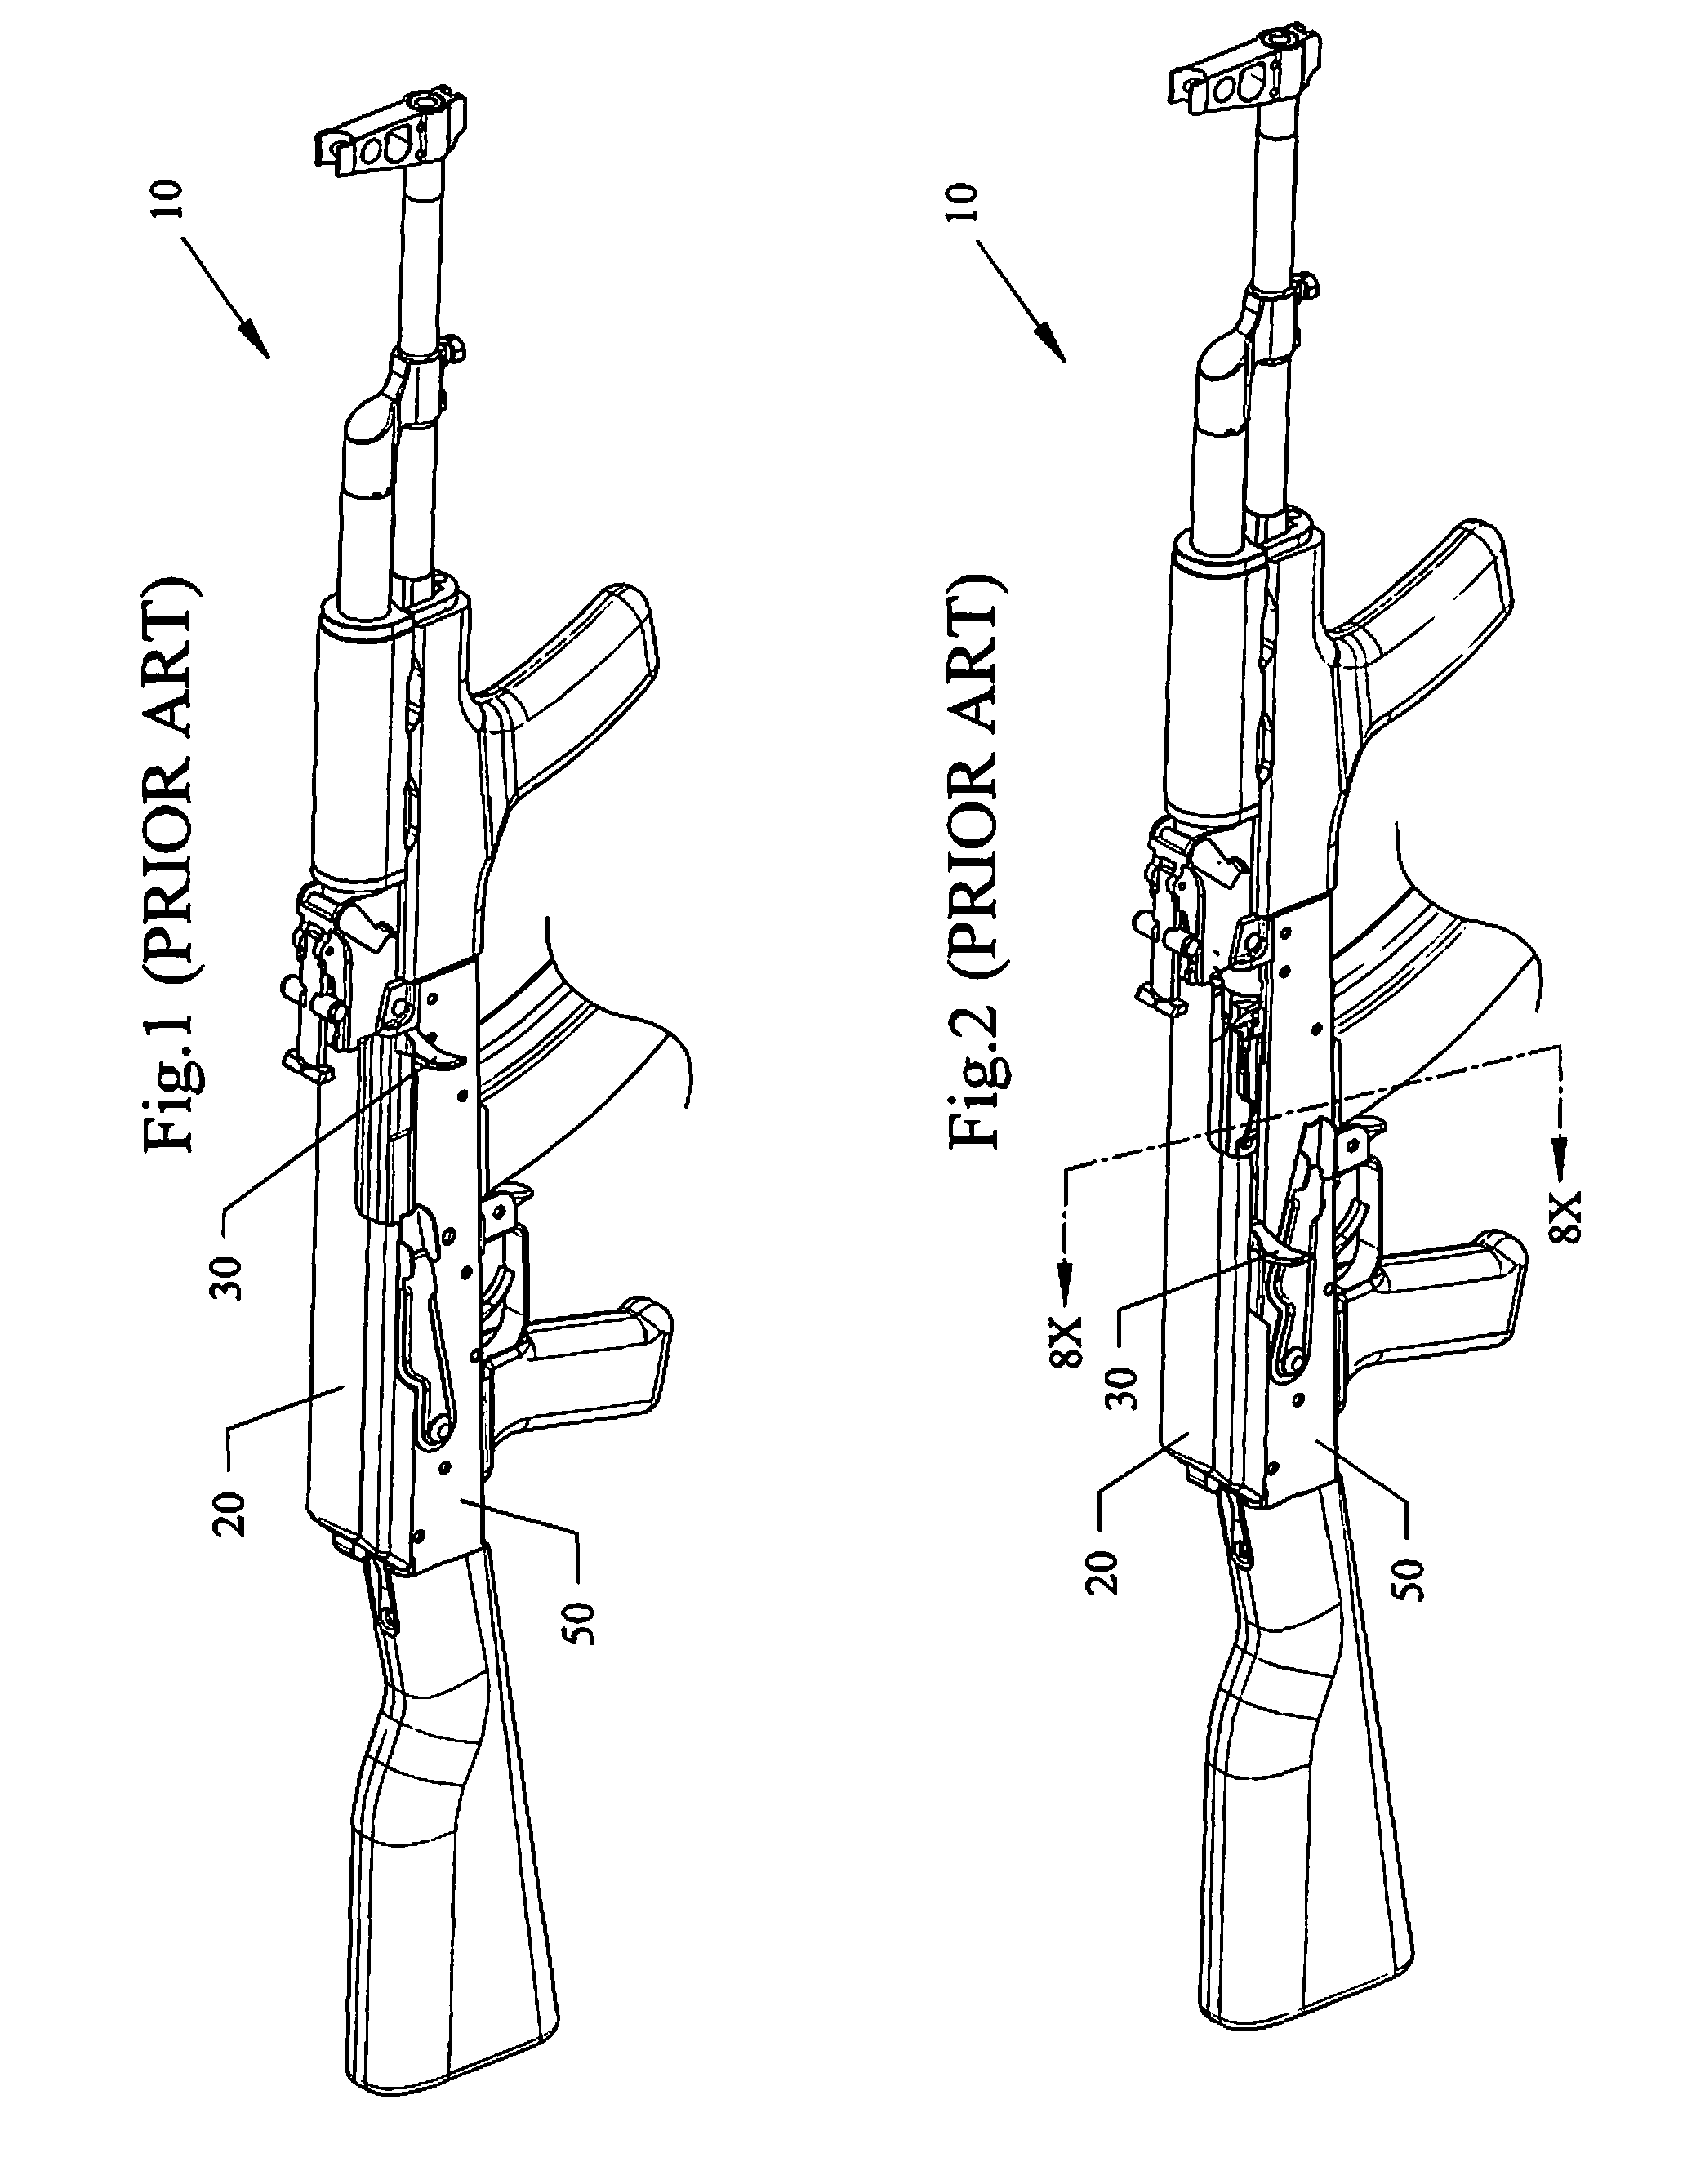 Firearm modification kit